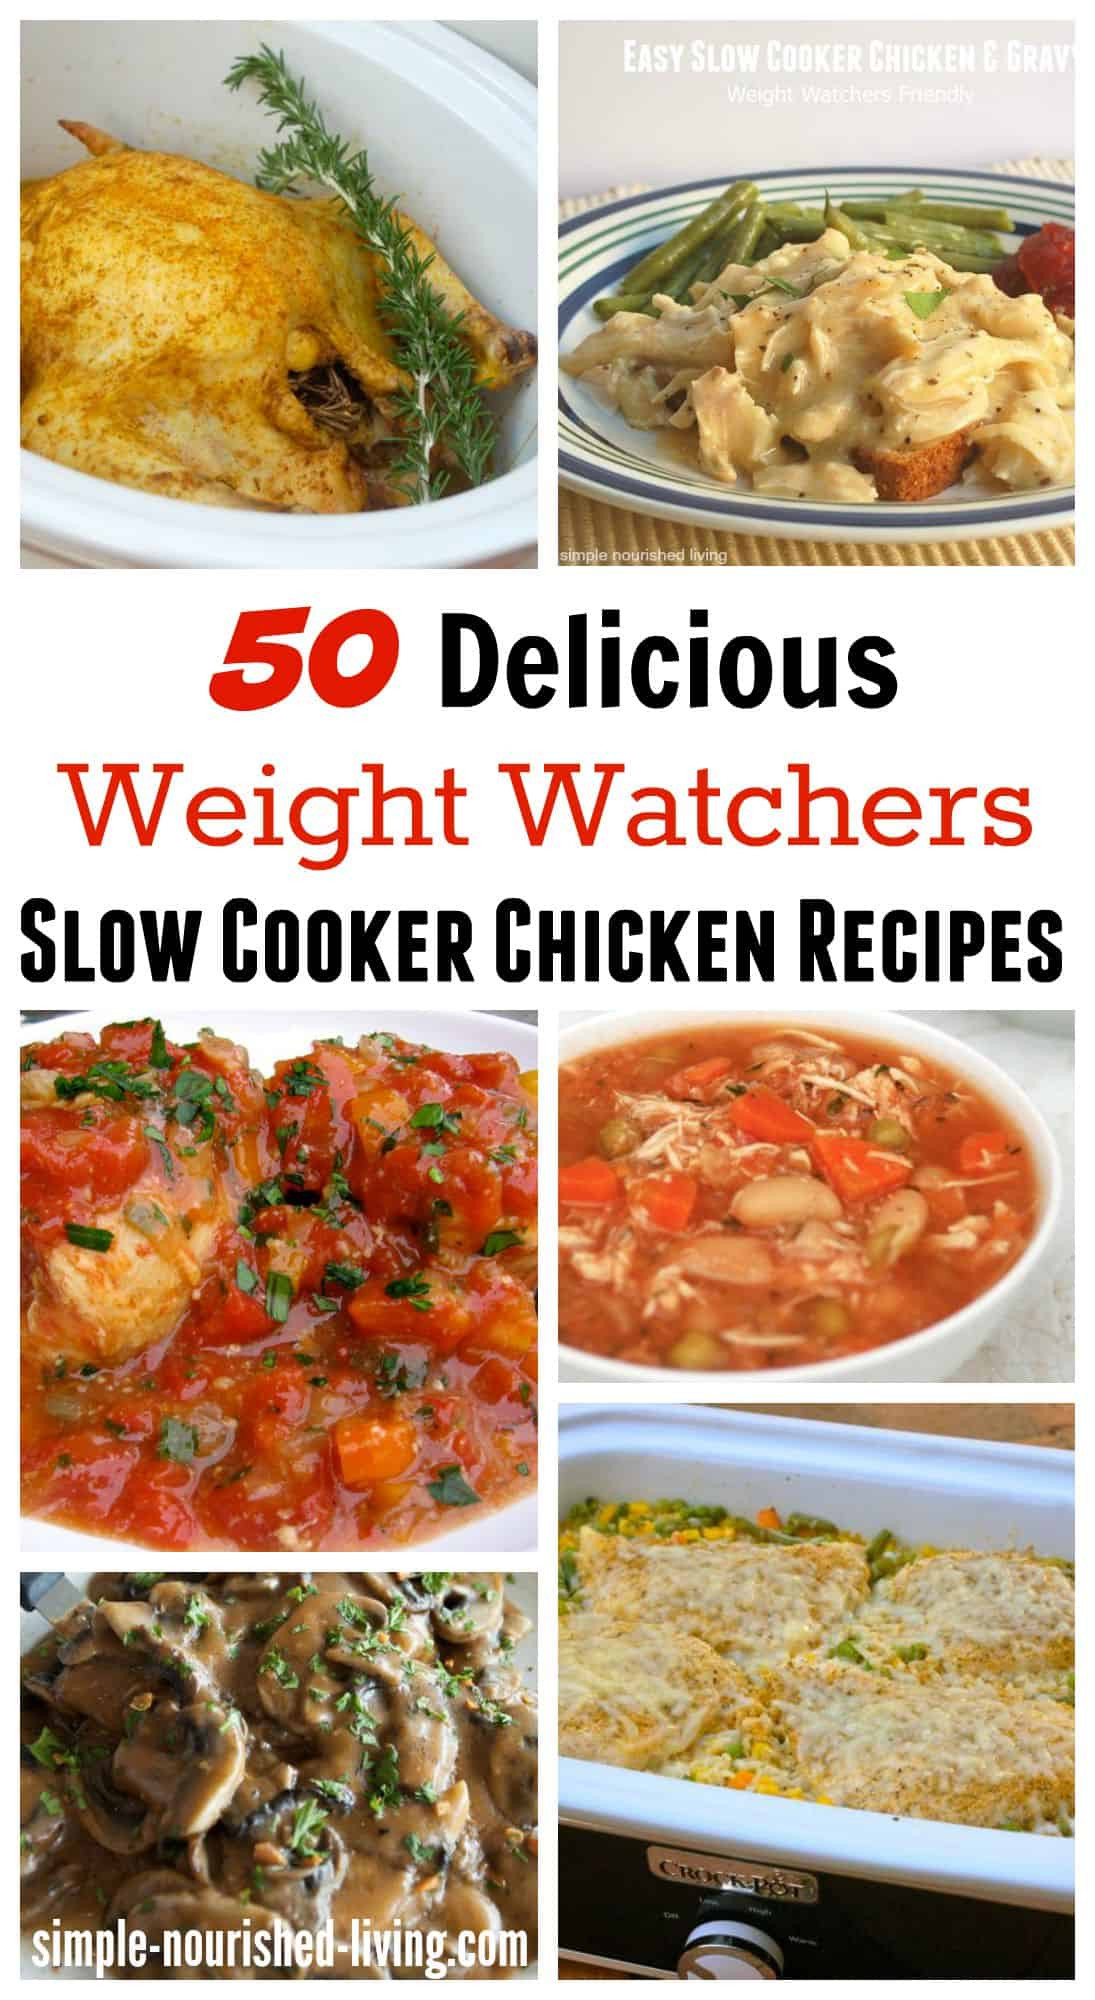 Slow Cooker Healthy Chicken Recipes
 Healthy Slow Cooker Chicken Recipes for Weight Watchers